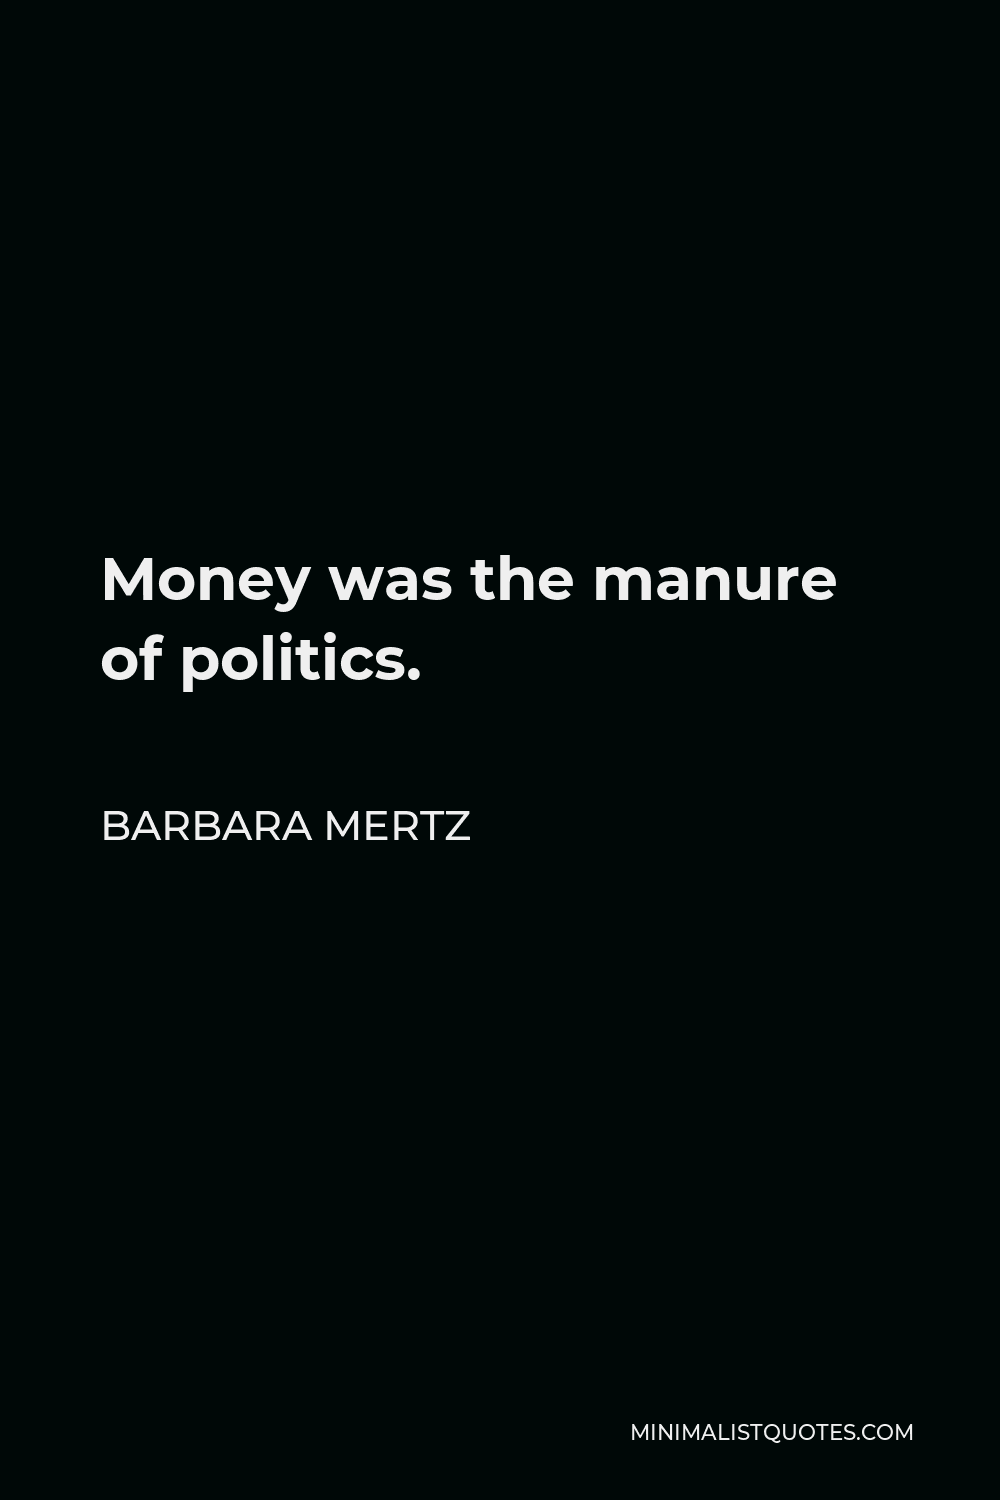 Barbara Mertz Quote - Money was the manure of politics.